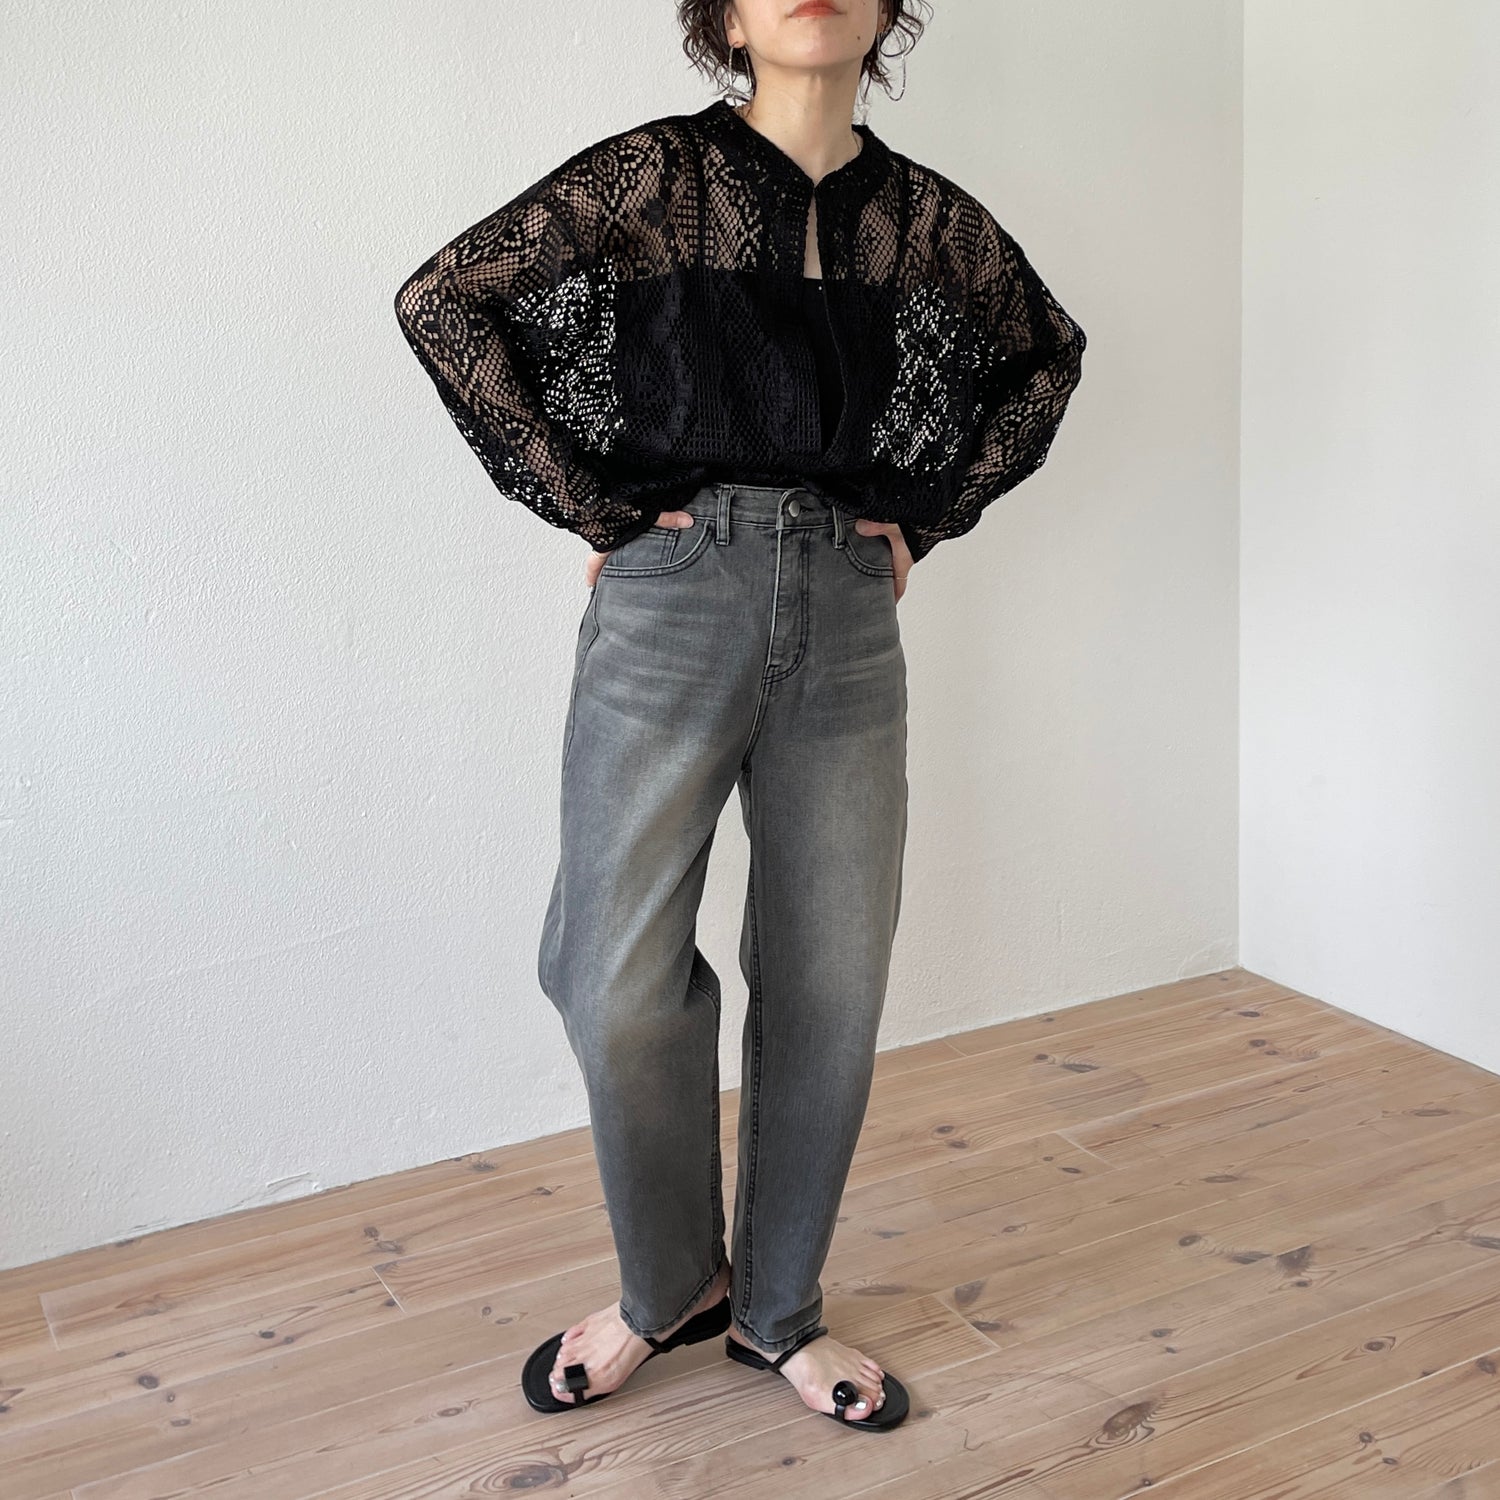 over size lace caftan blouse / black